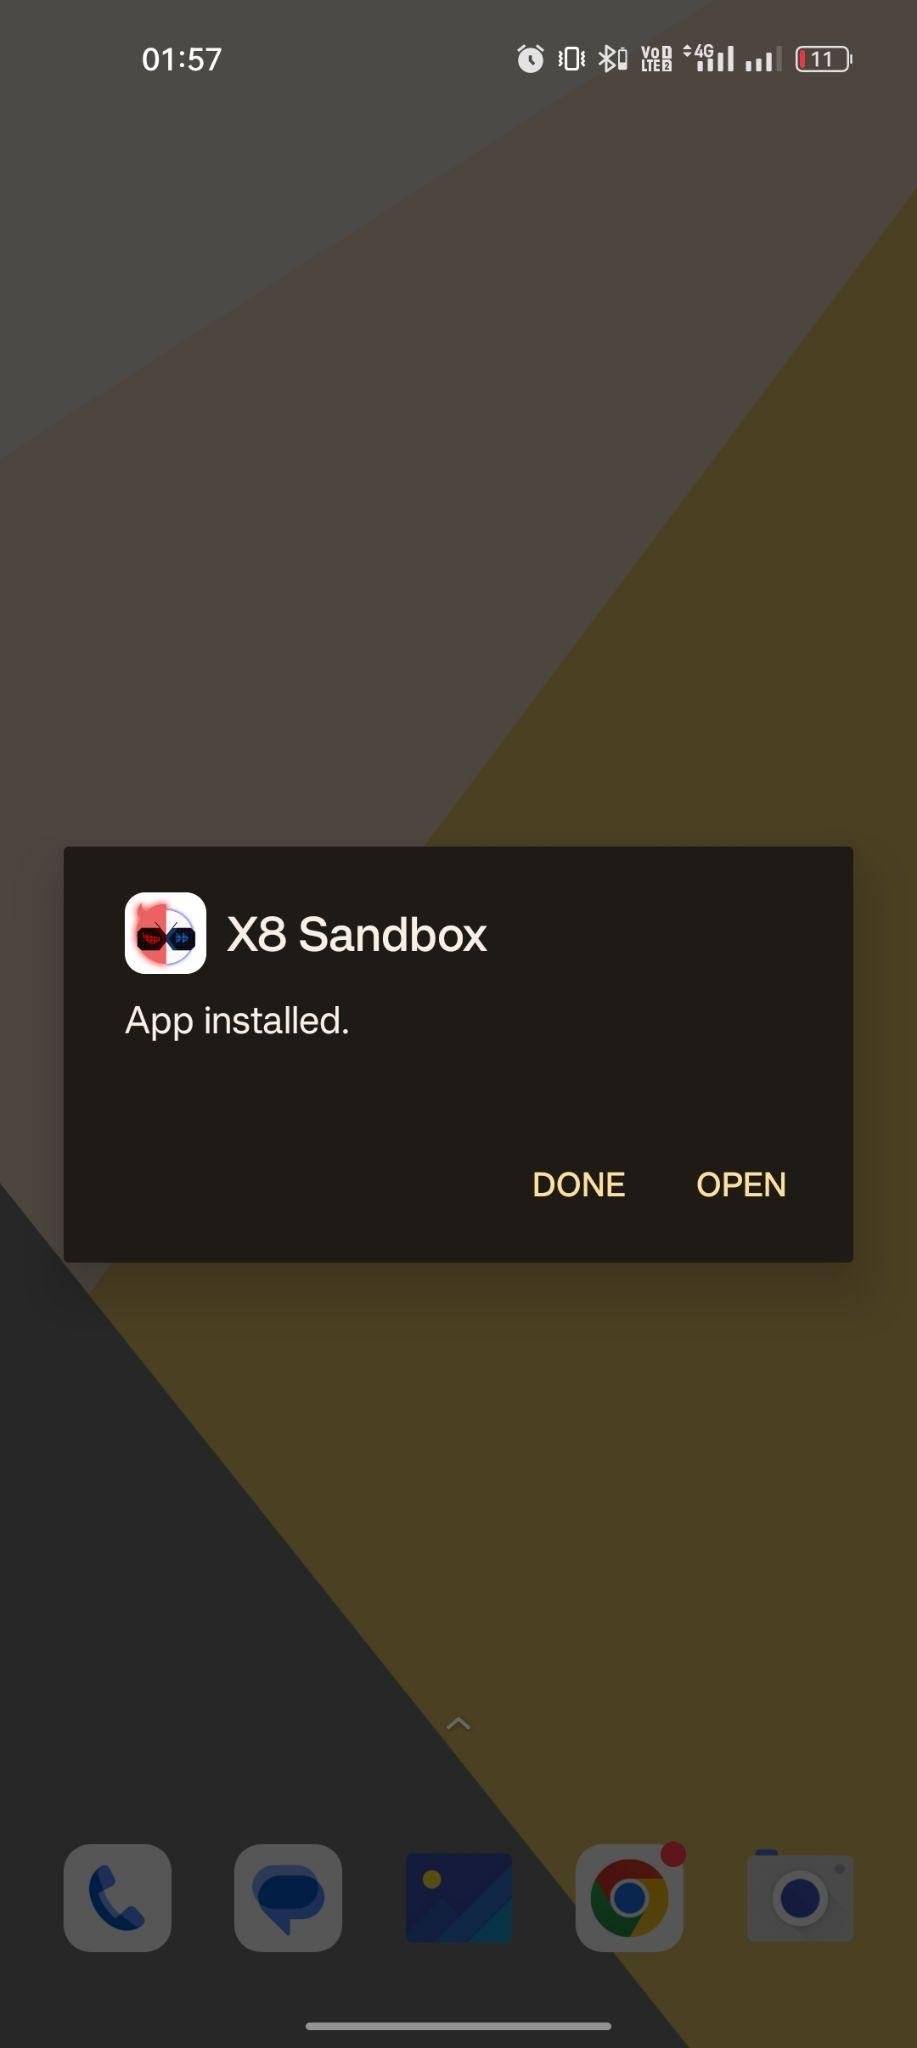 X8 Sandbox apk installed